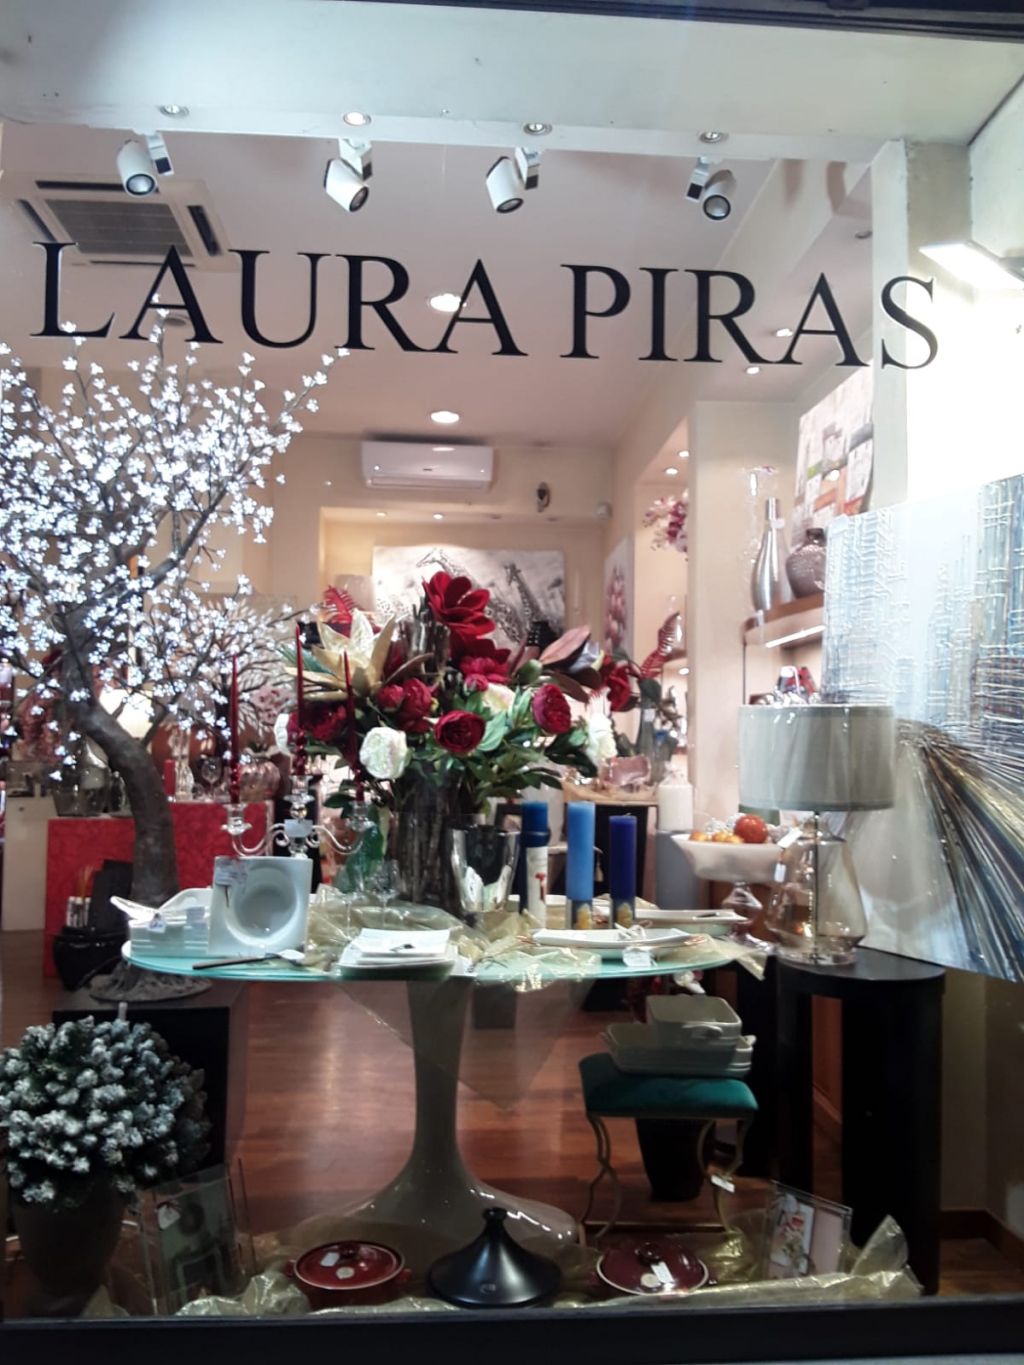 Gallery Laura Piras